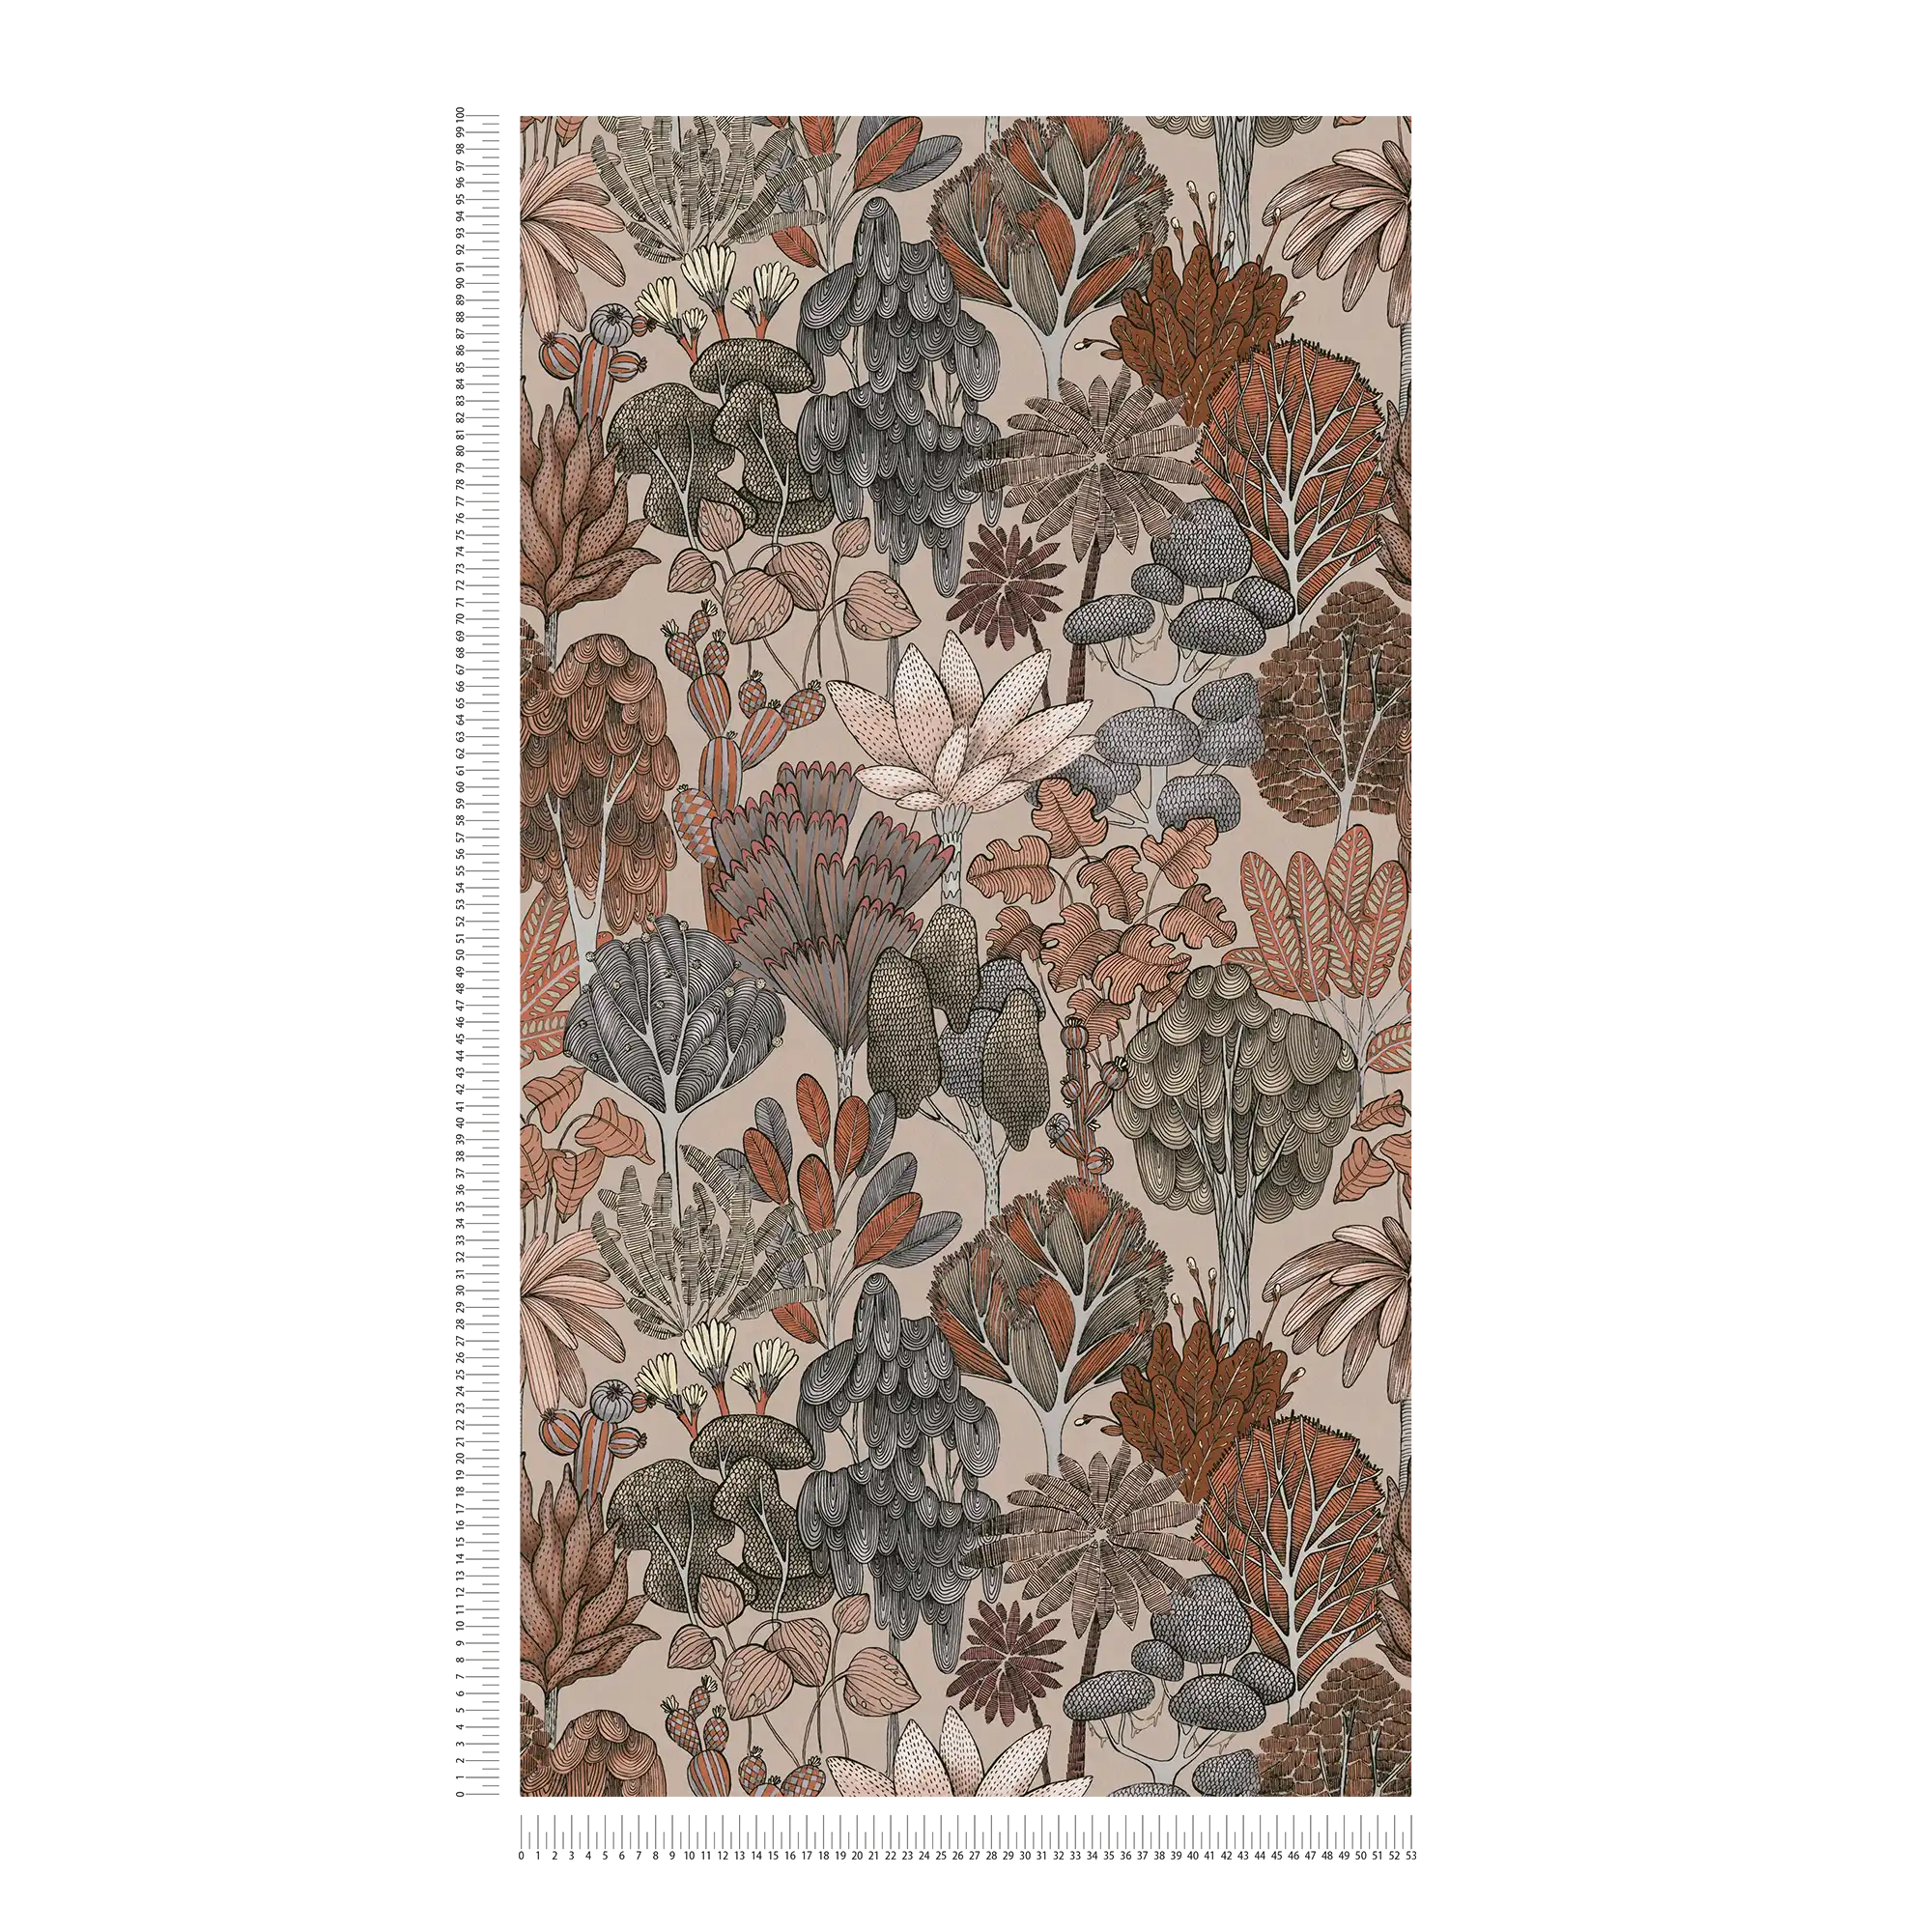             Wallpaper brown beige with floral pattern in doodle look - beige, red, orange
        